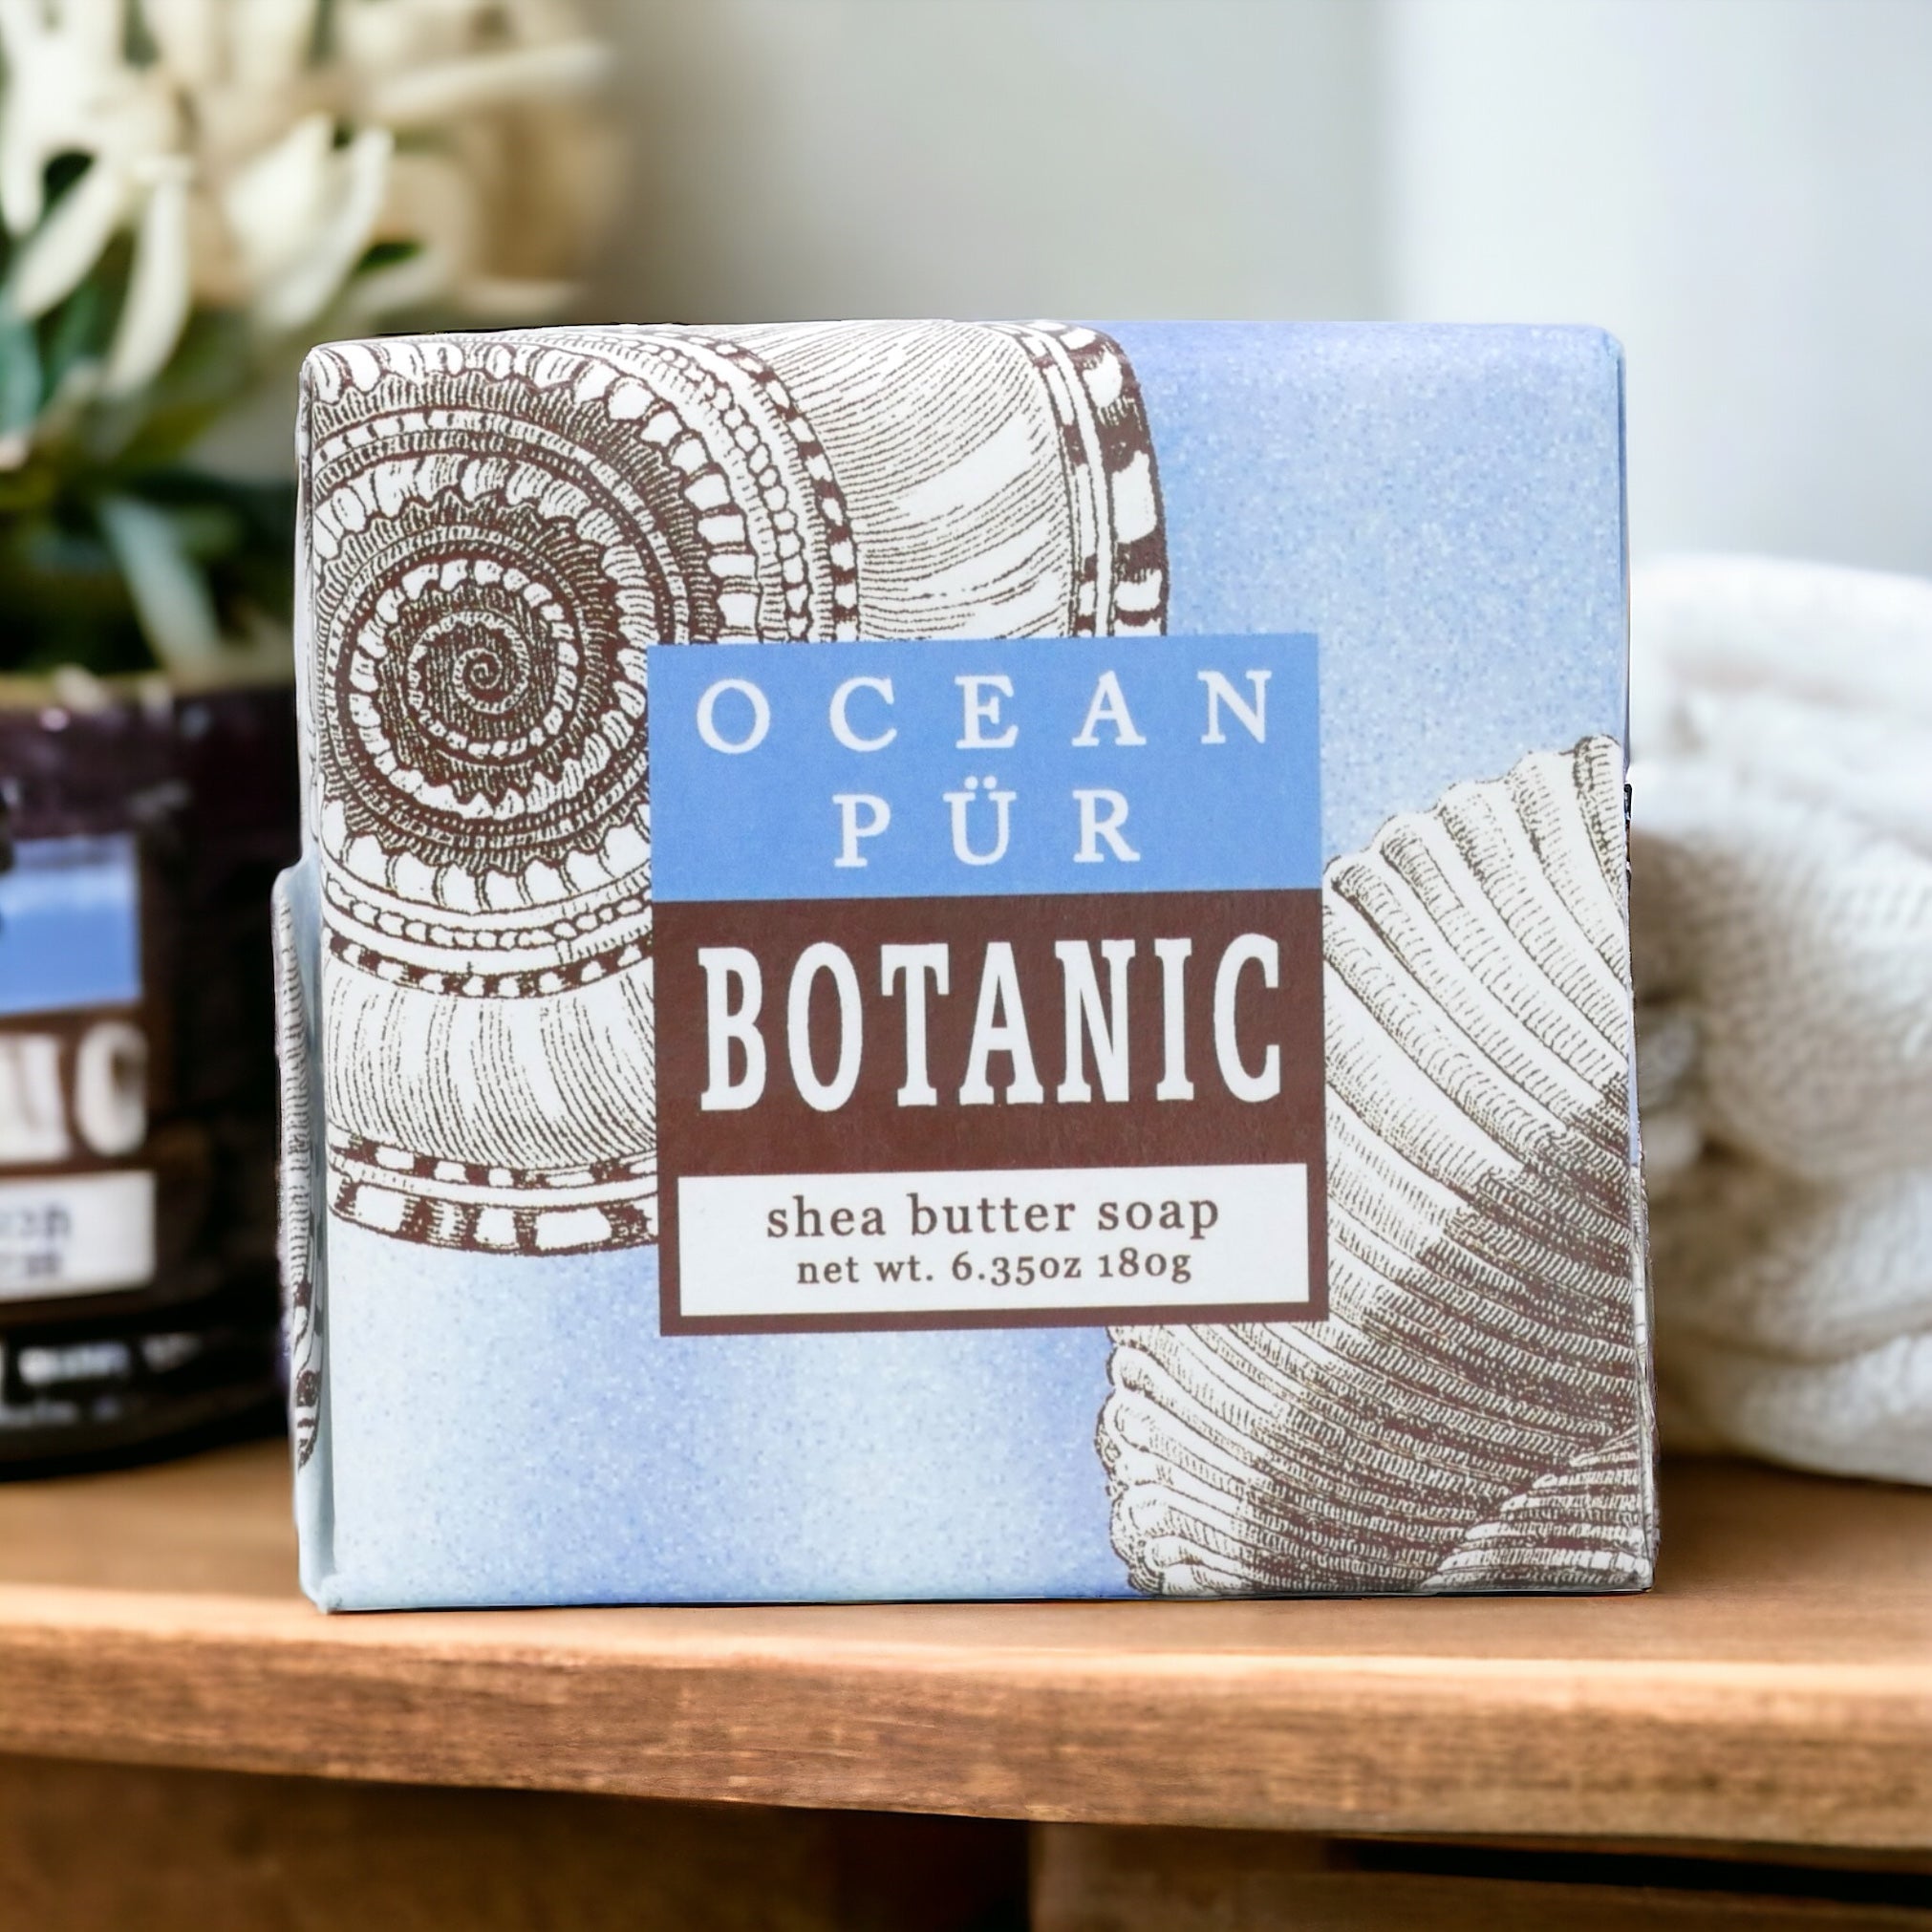 Ocean Pür Botanic Shea Butter Soap by Greenwich Bay Trading Co.